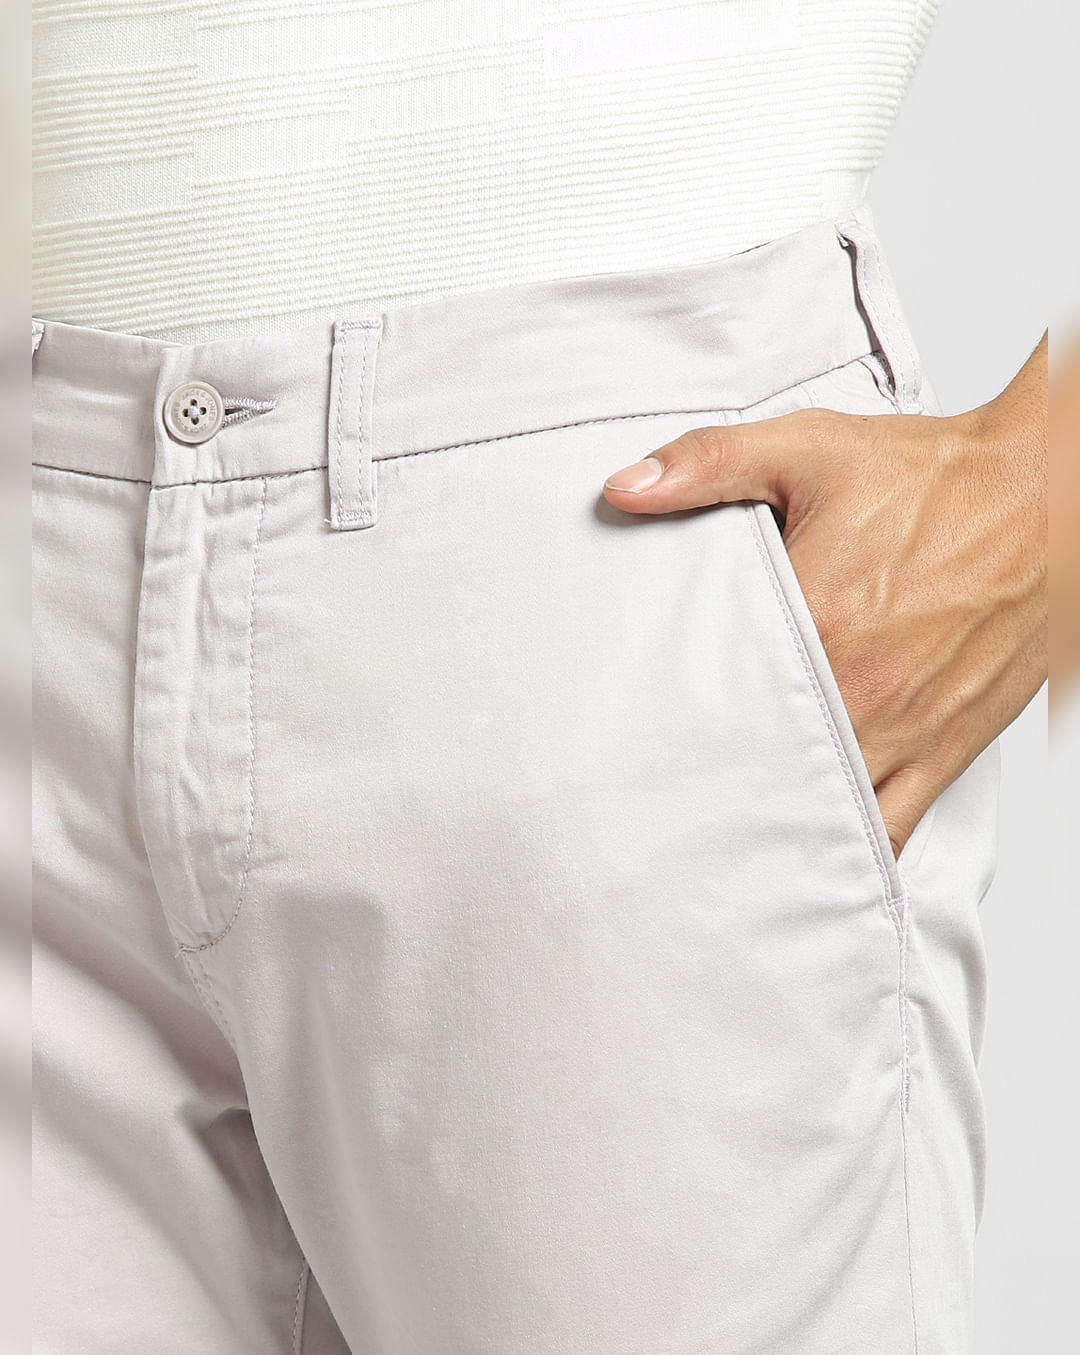 Solana Pant, Men's Taupe Casual Pants